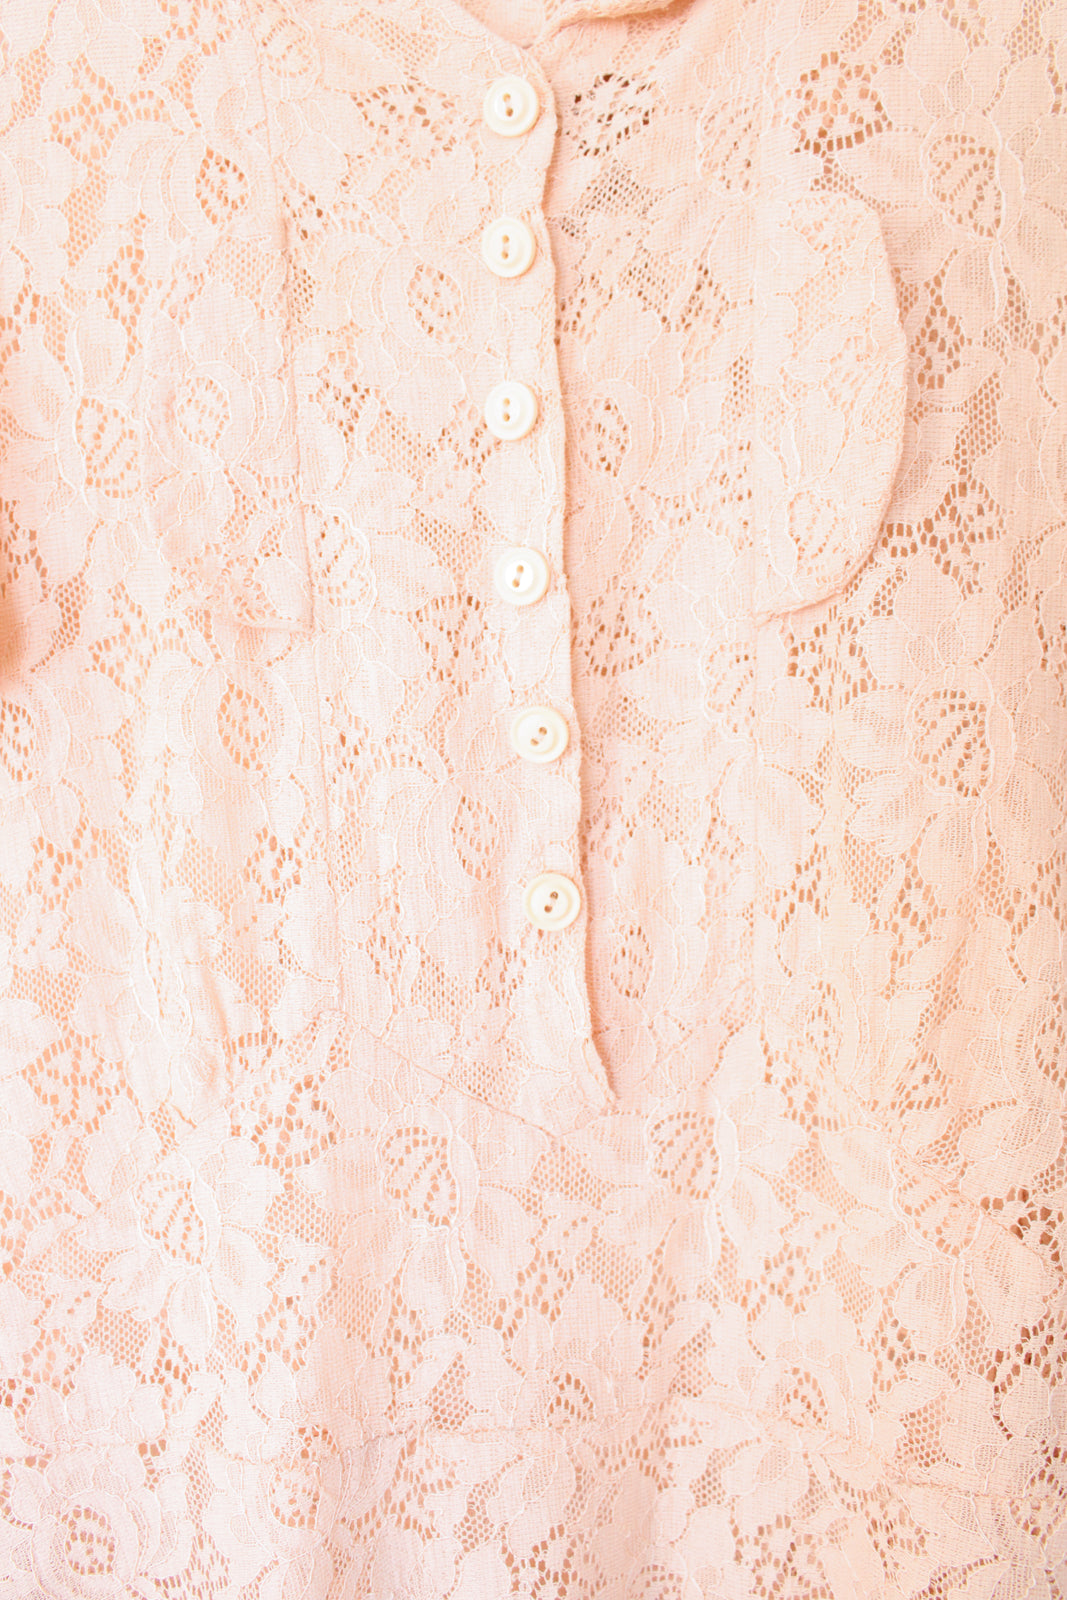 1930s Floral Lace Pale Apricot Dress - Small